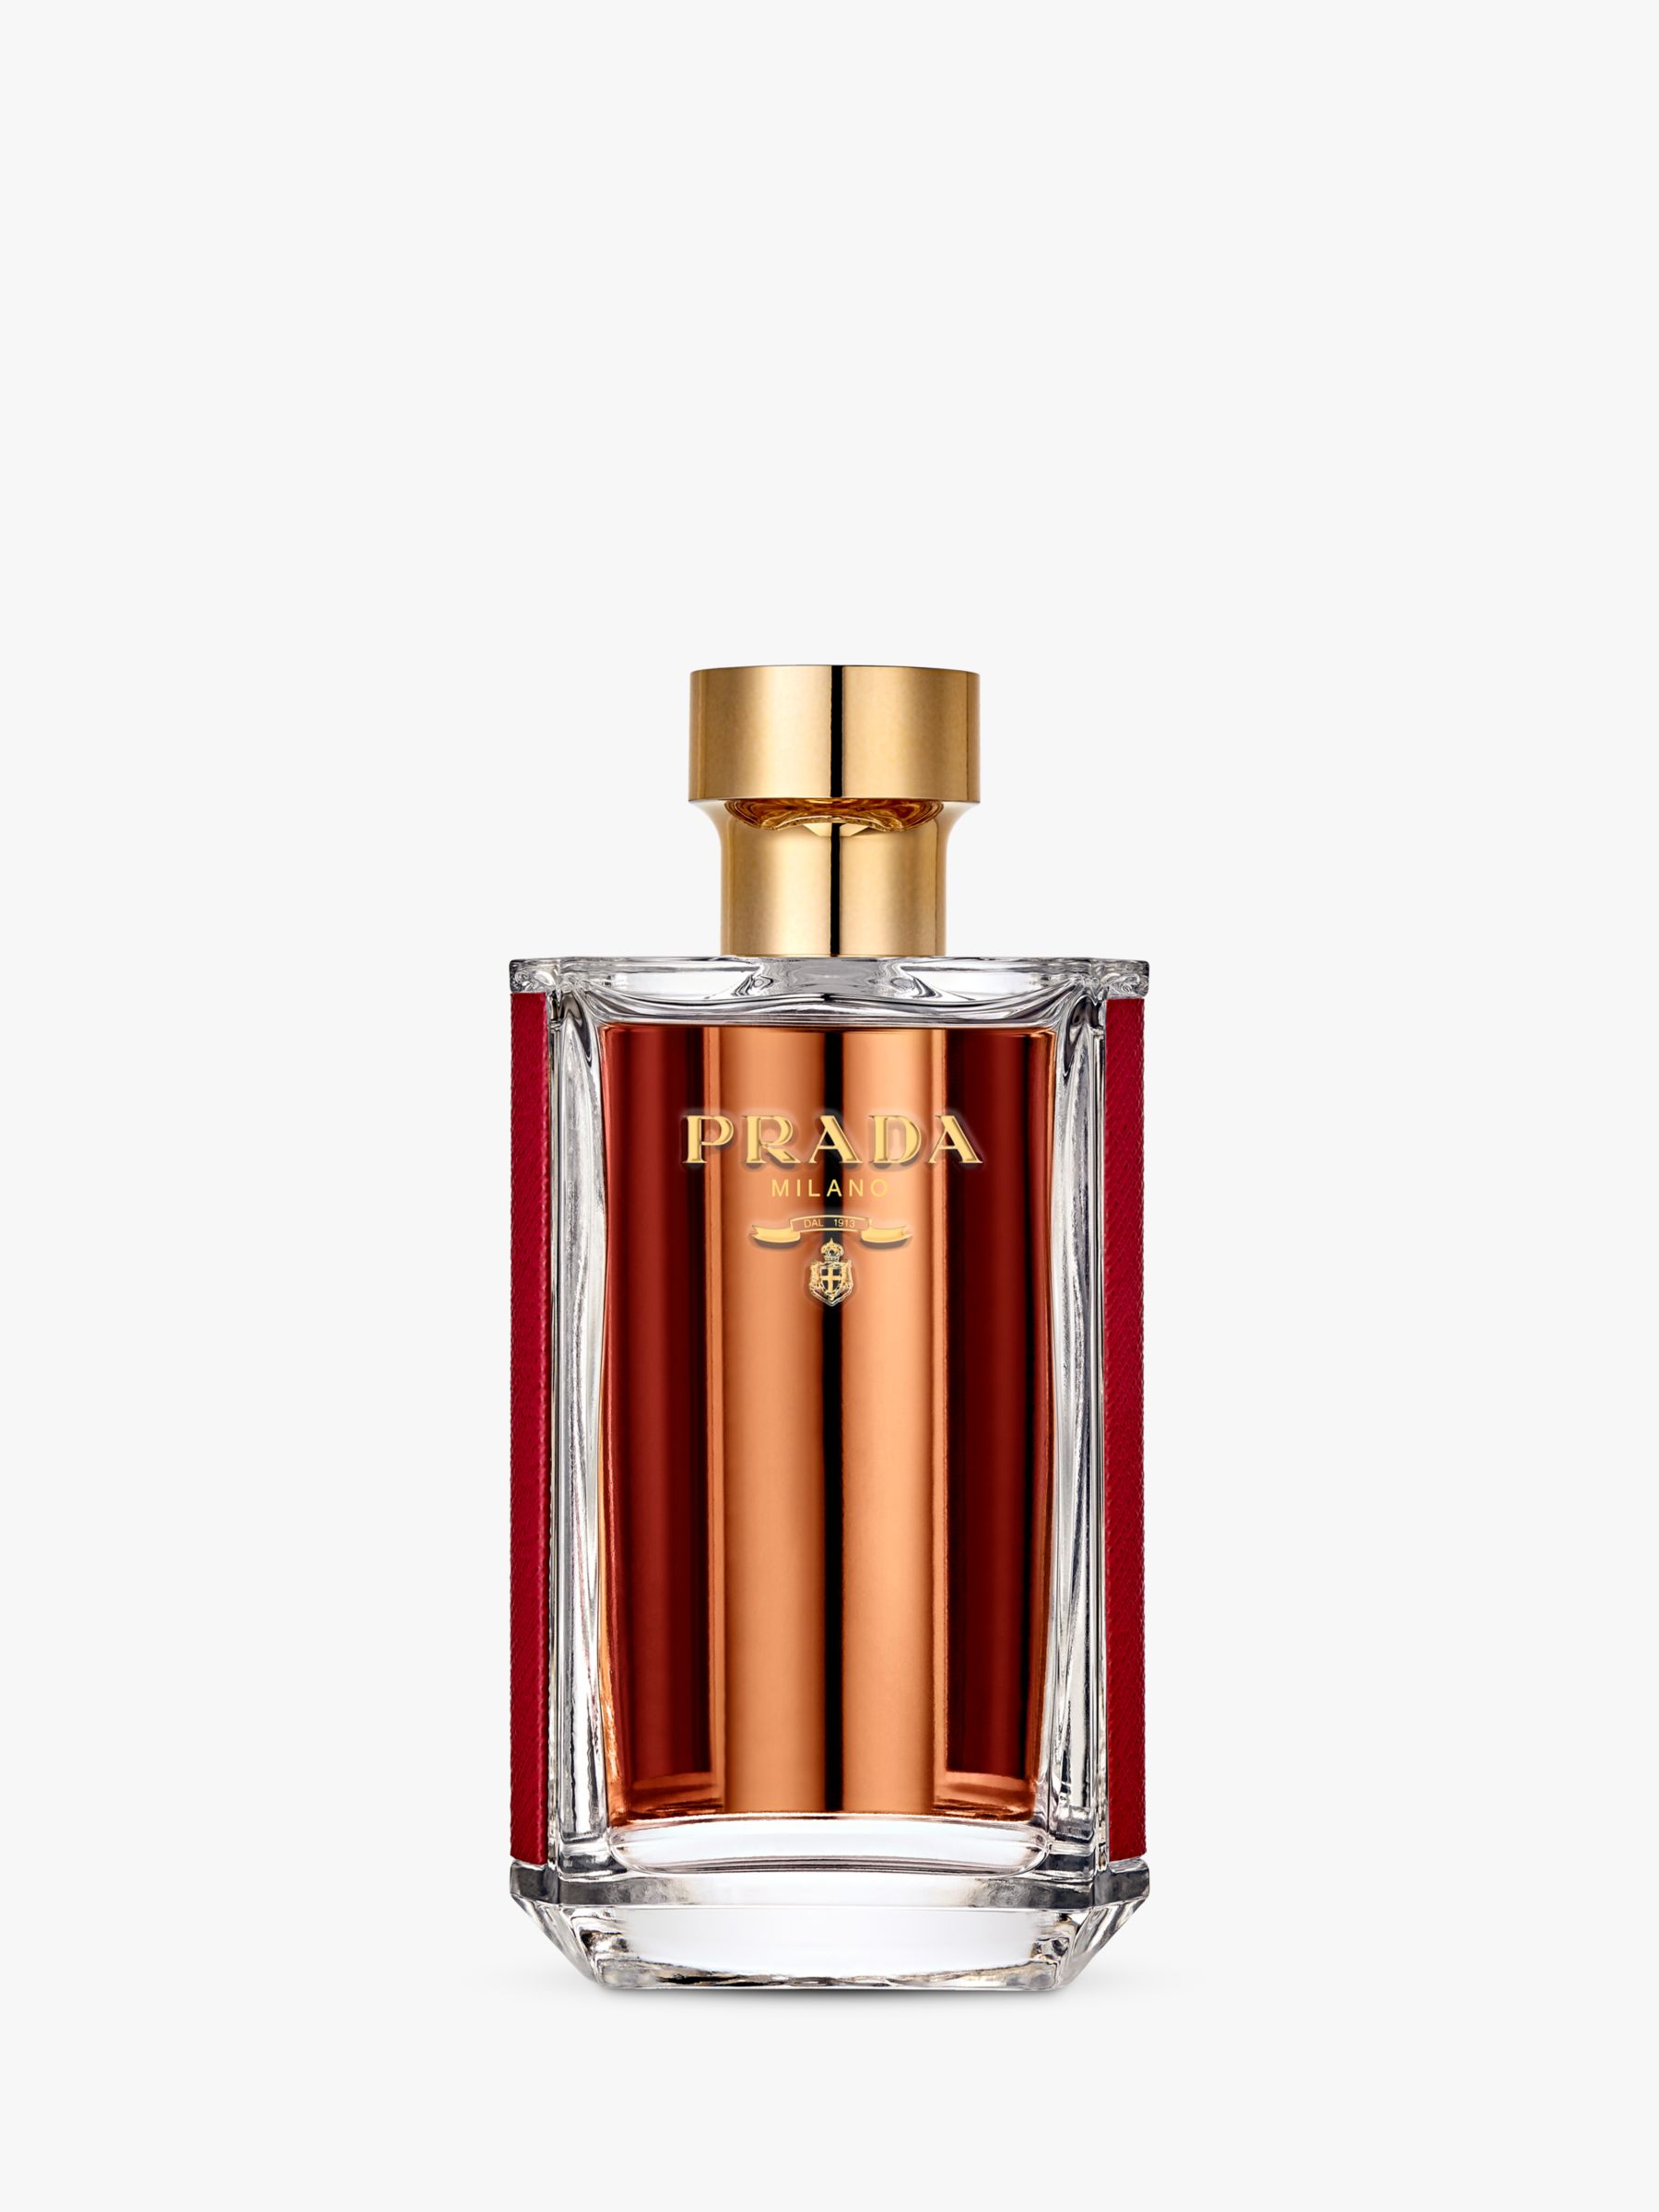 Prada La Femme Intense Eau de Parfum, 100ml at John Lewis & Partners